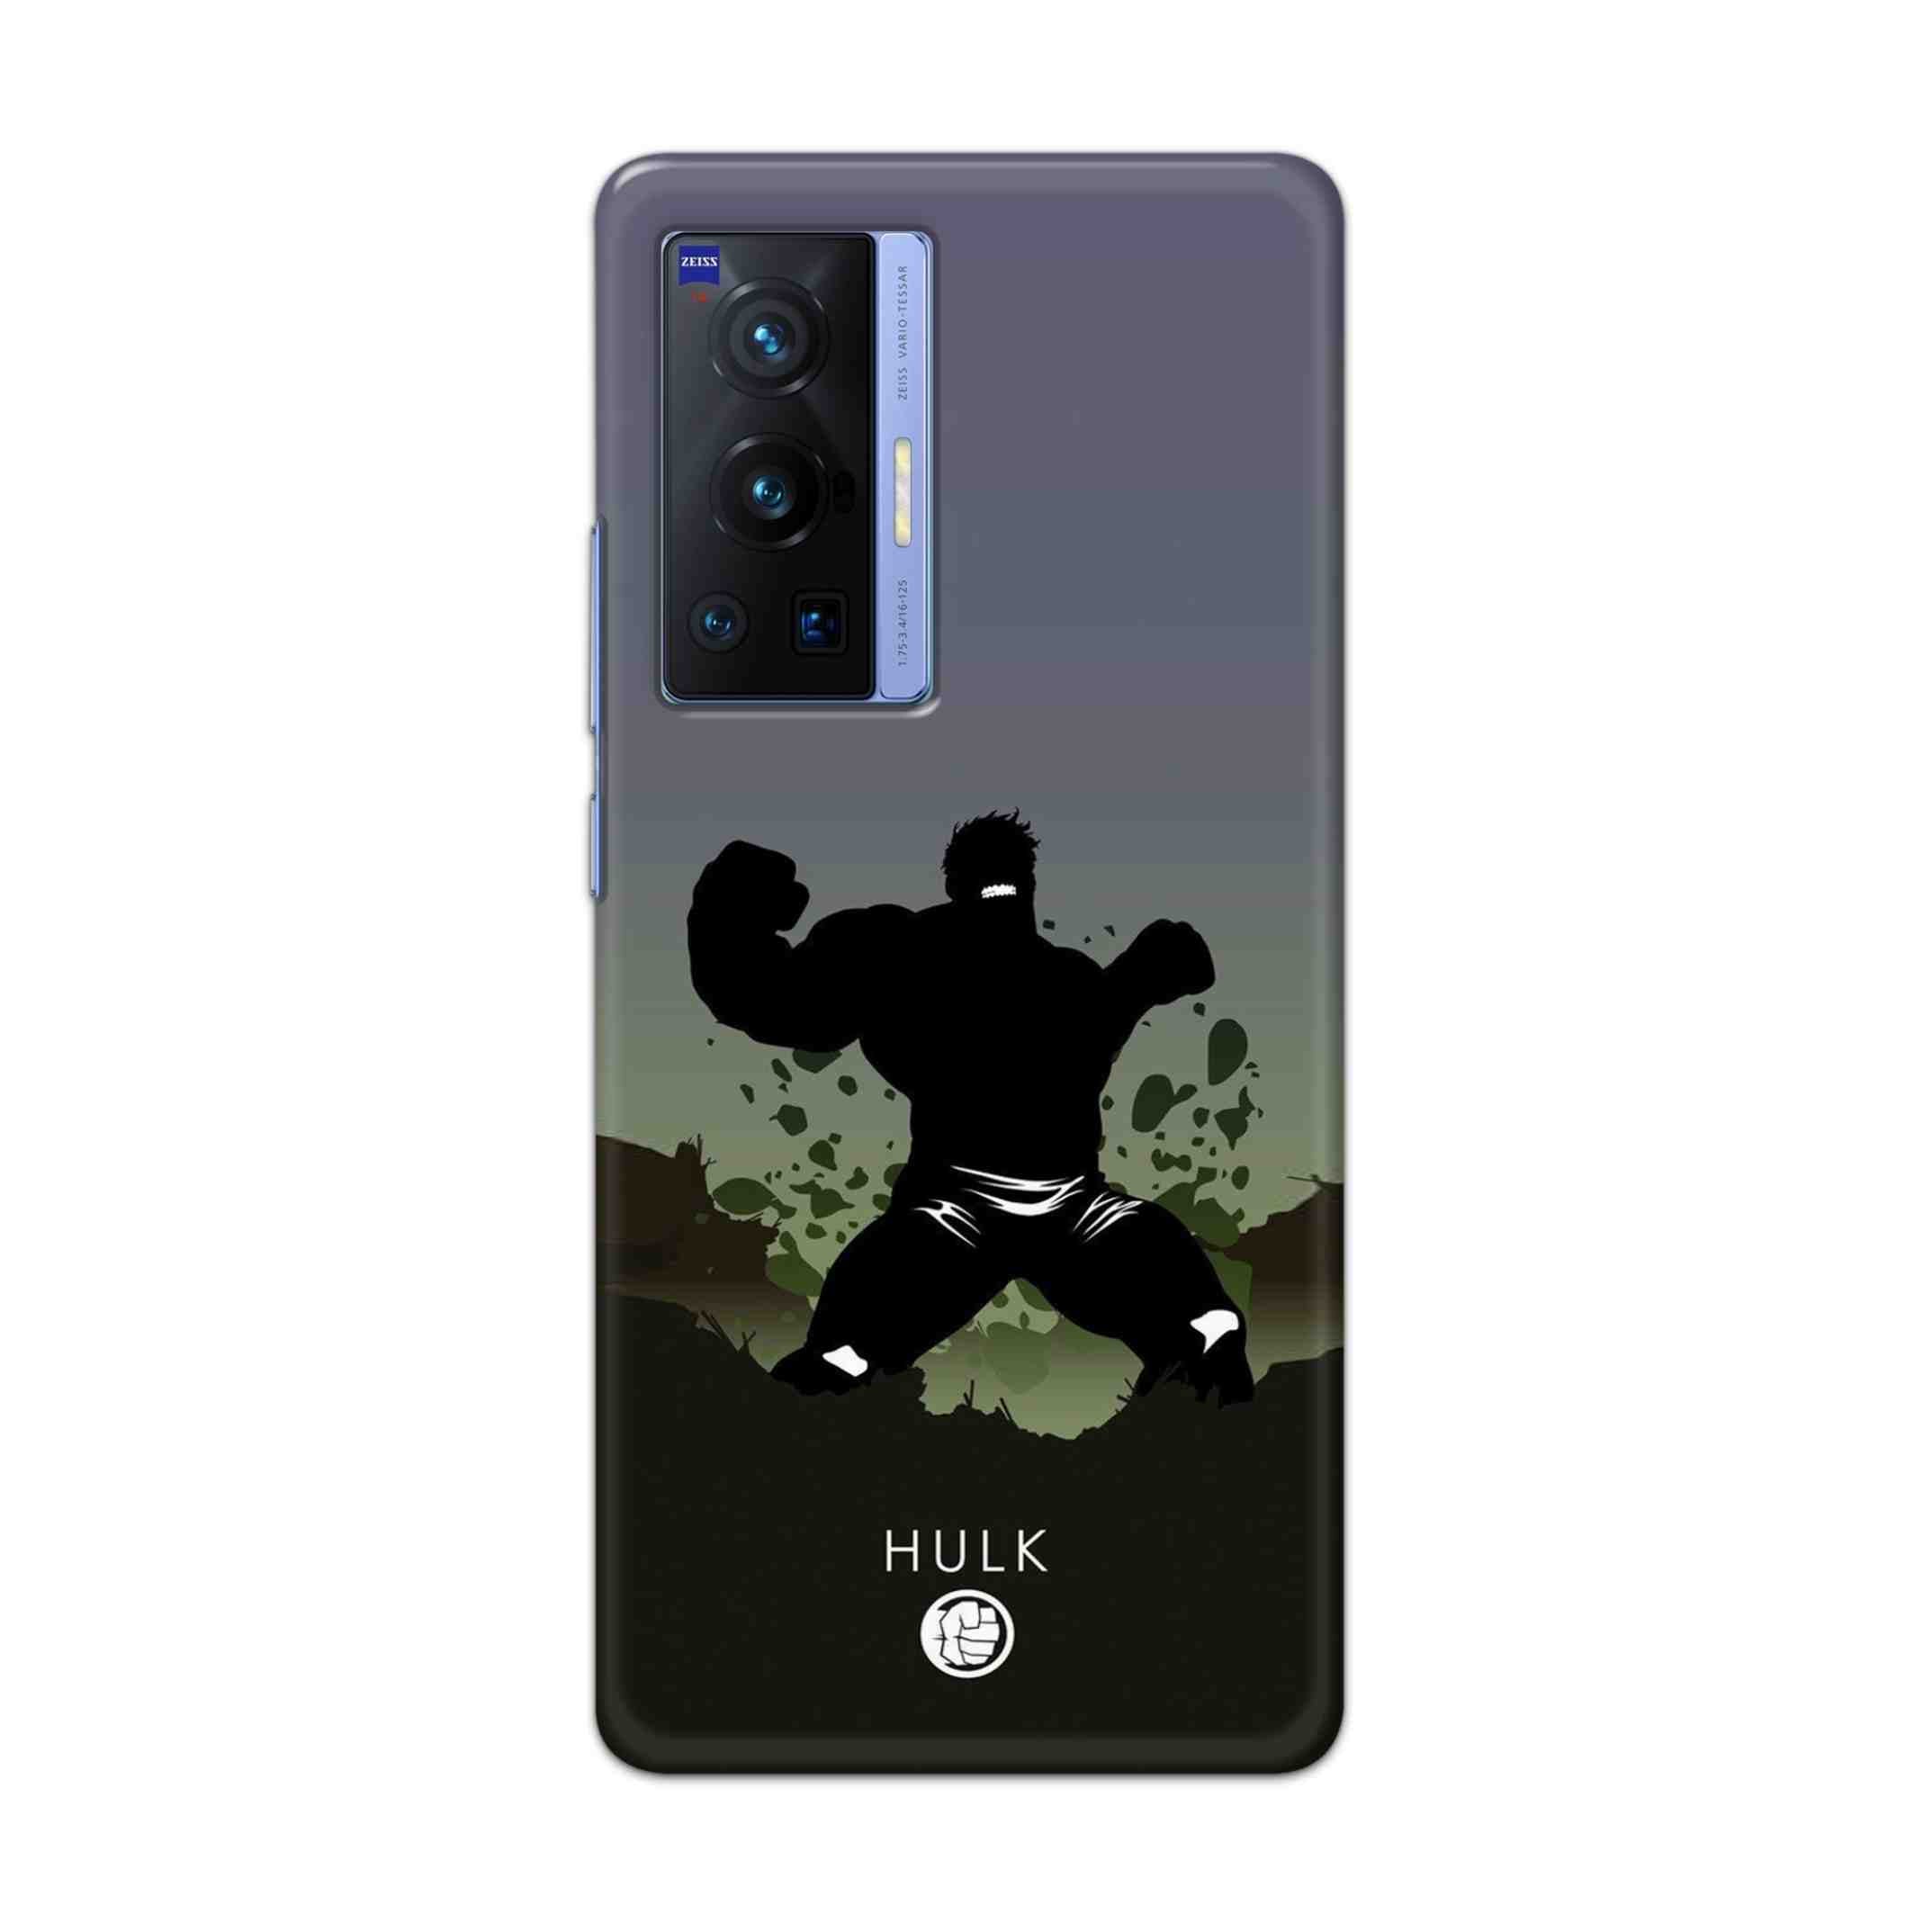 Buy Hulk Drax Hard Back Mobile Phone Case Cover For Vivo X70 Pro Online